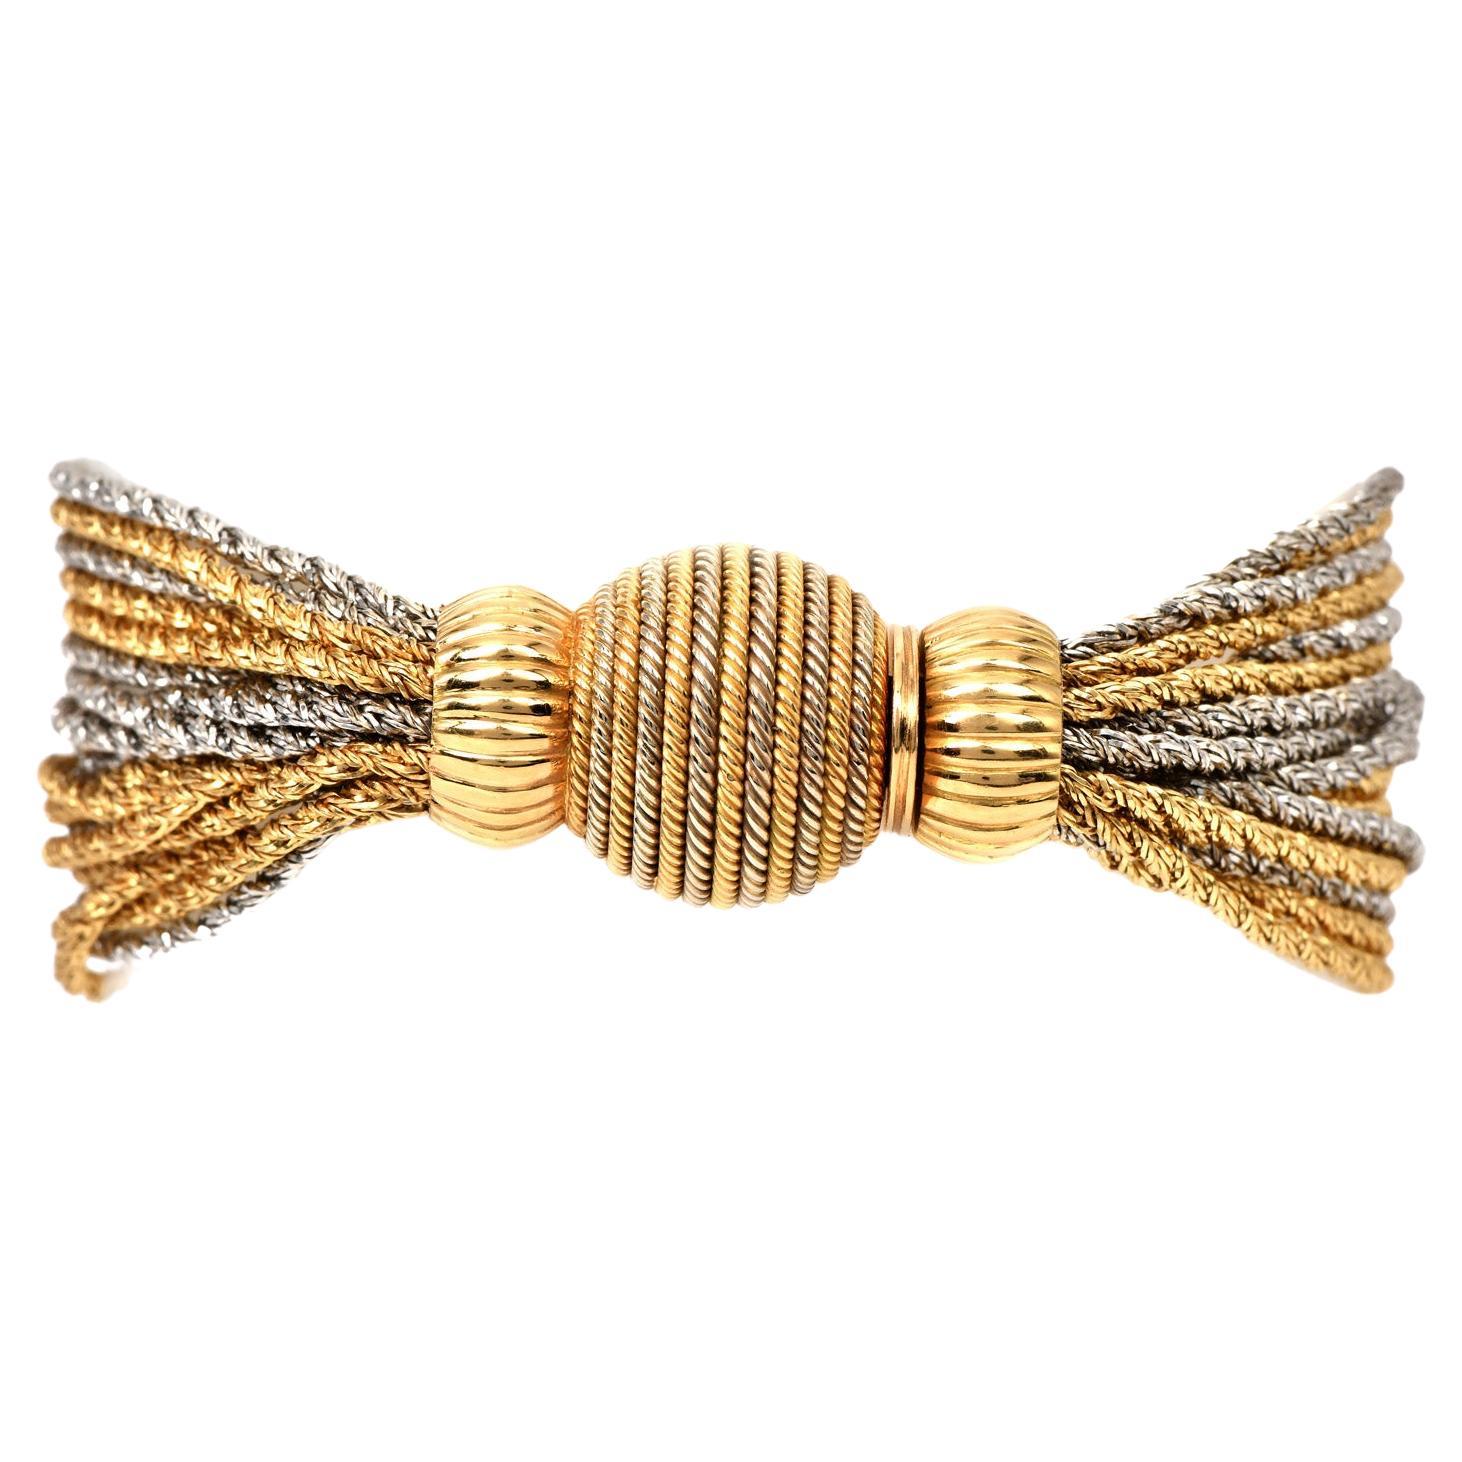 Marchisio Italy 18K Two-Tone Gold Rope Multi Strand Bracelet